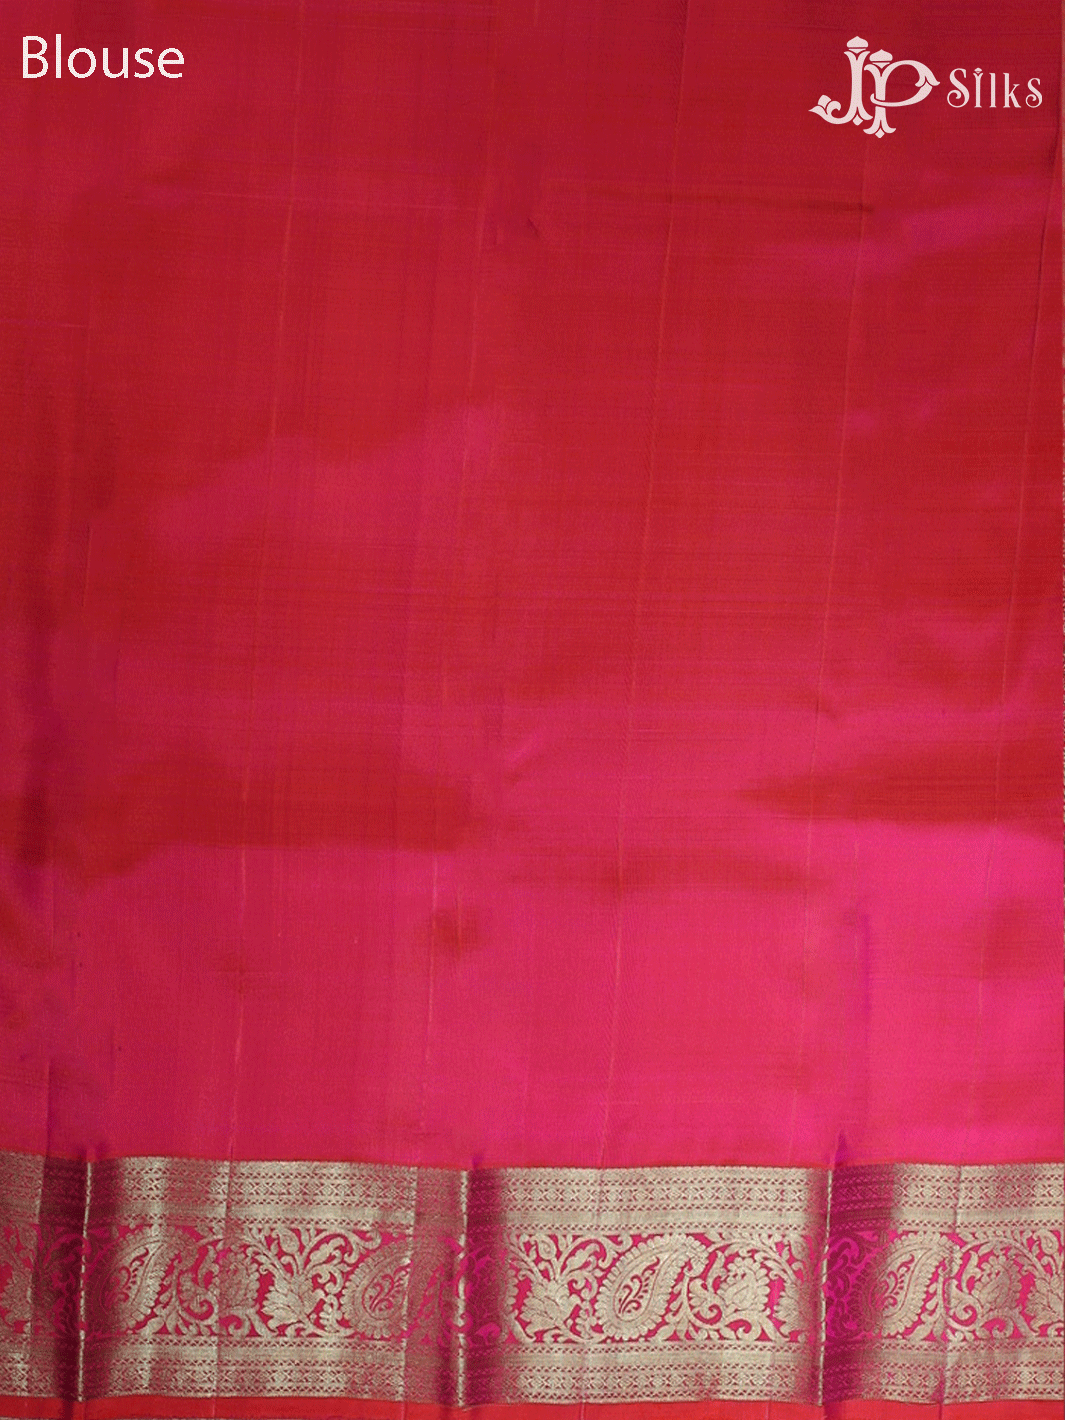 Pinkish Red Paisley Motif Kanchipuram Silk Saree - A1328 - View 2